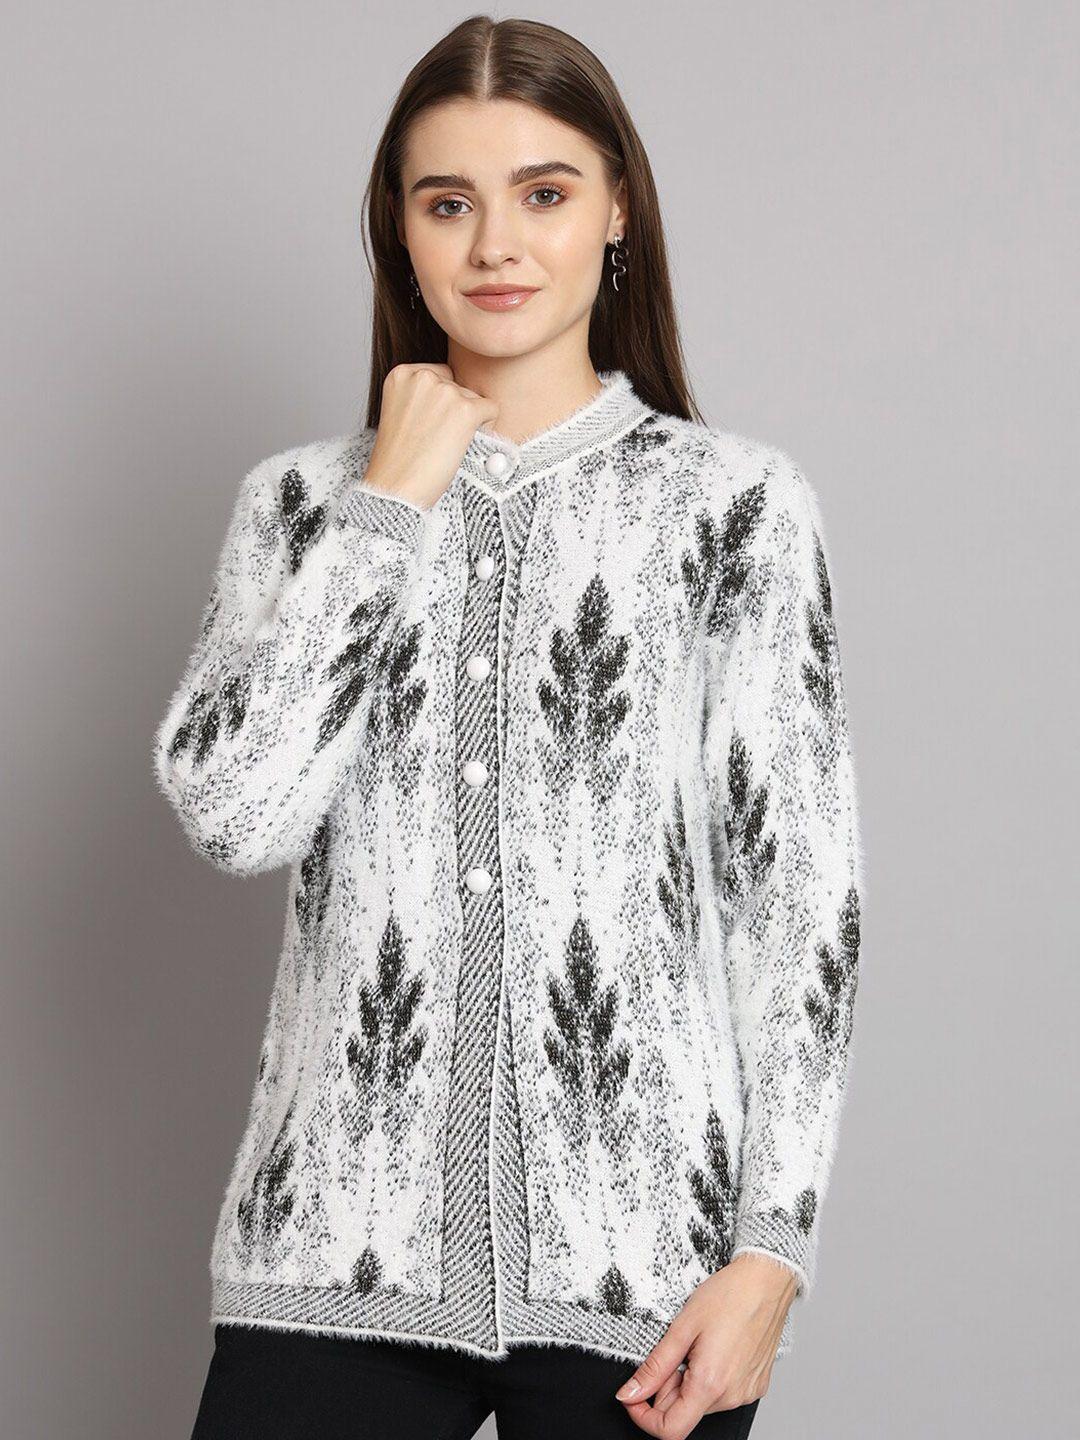 ewools floral printed round neck long sleeves woollen cardigan sweater